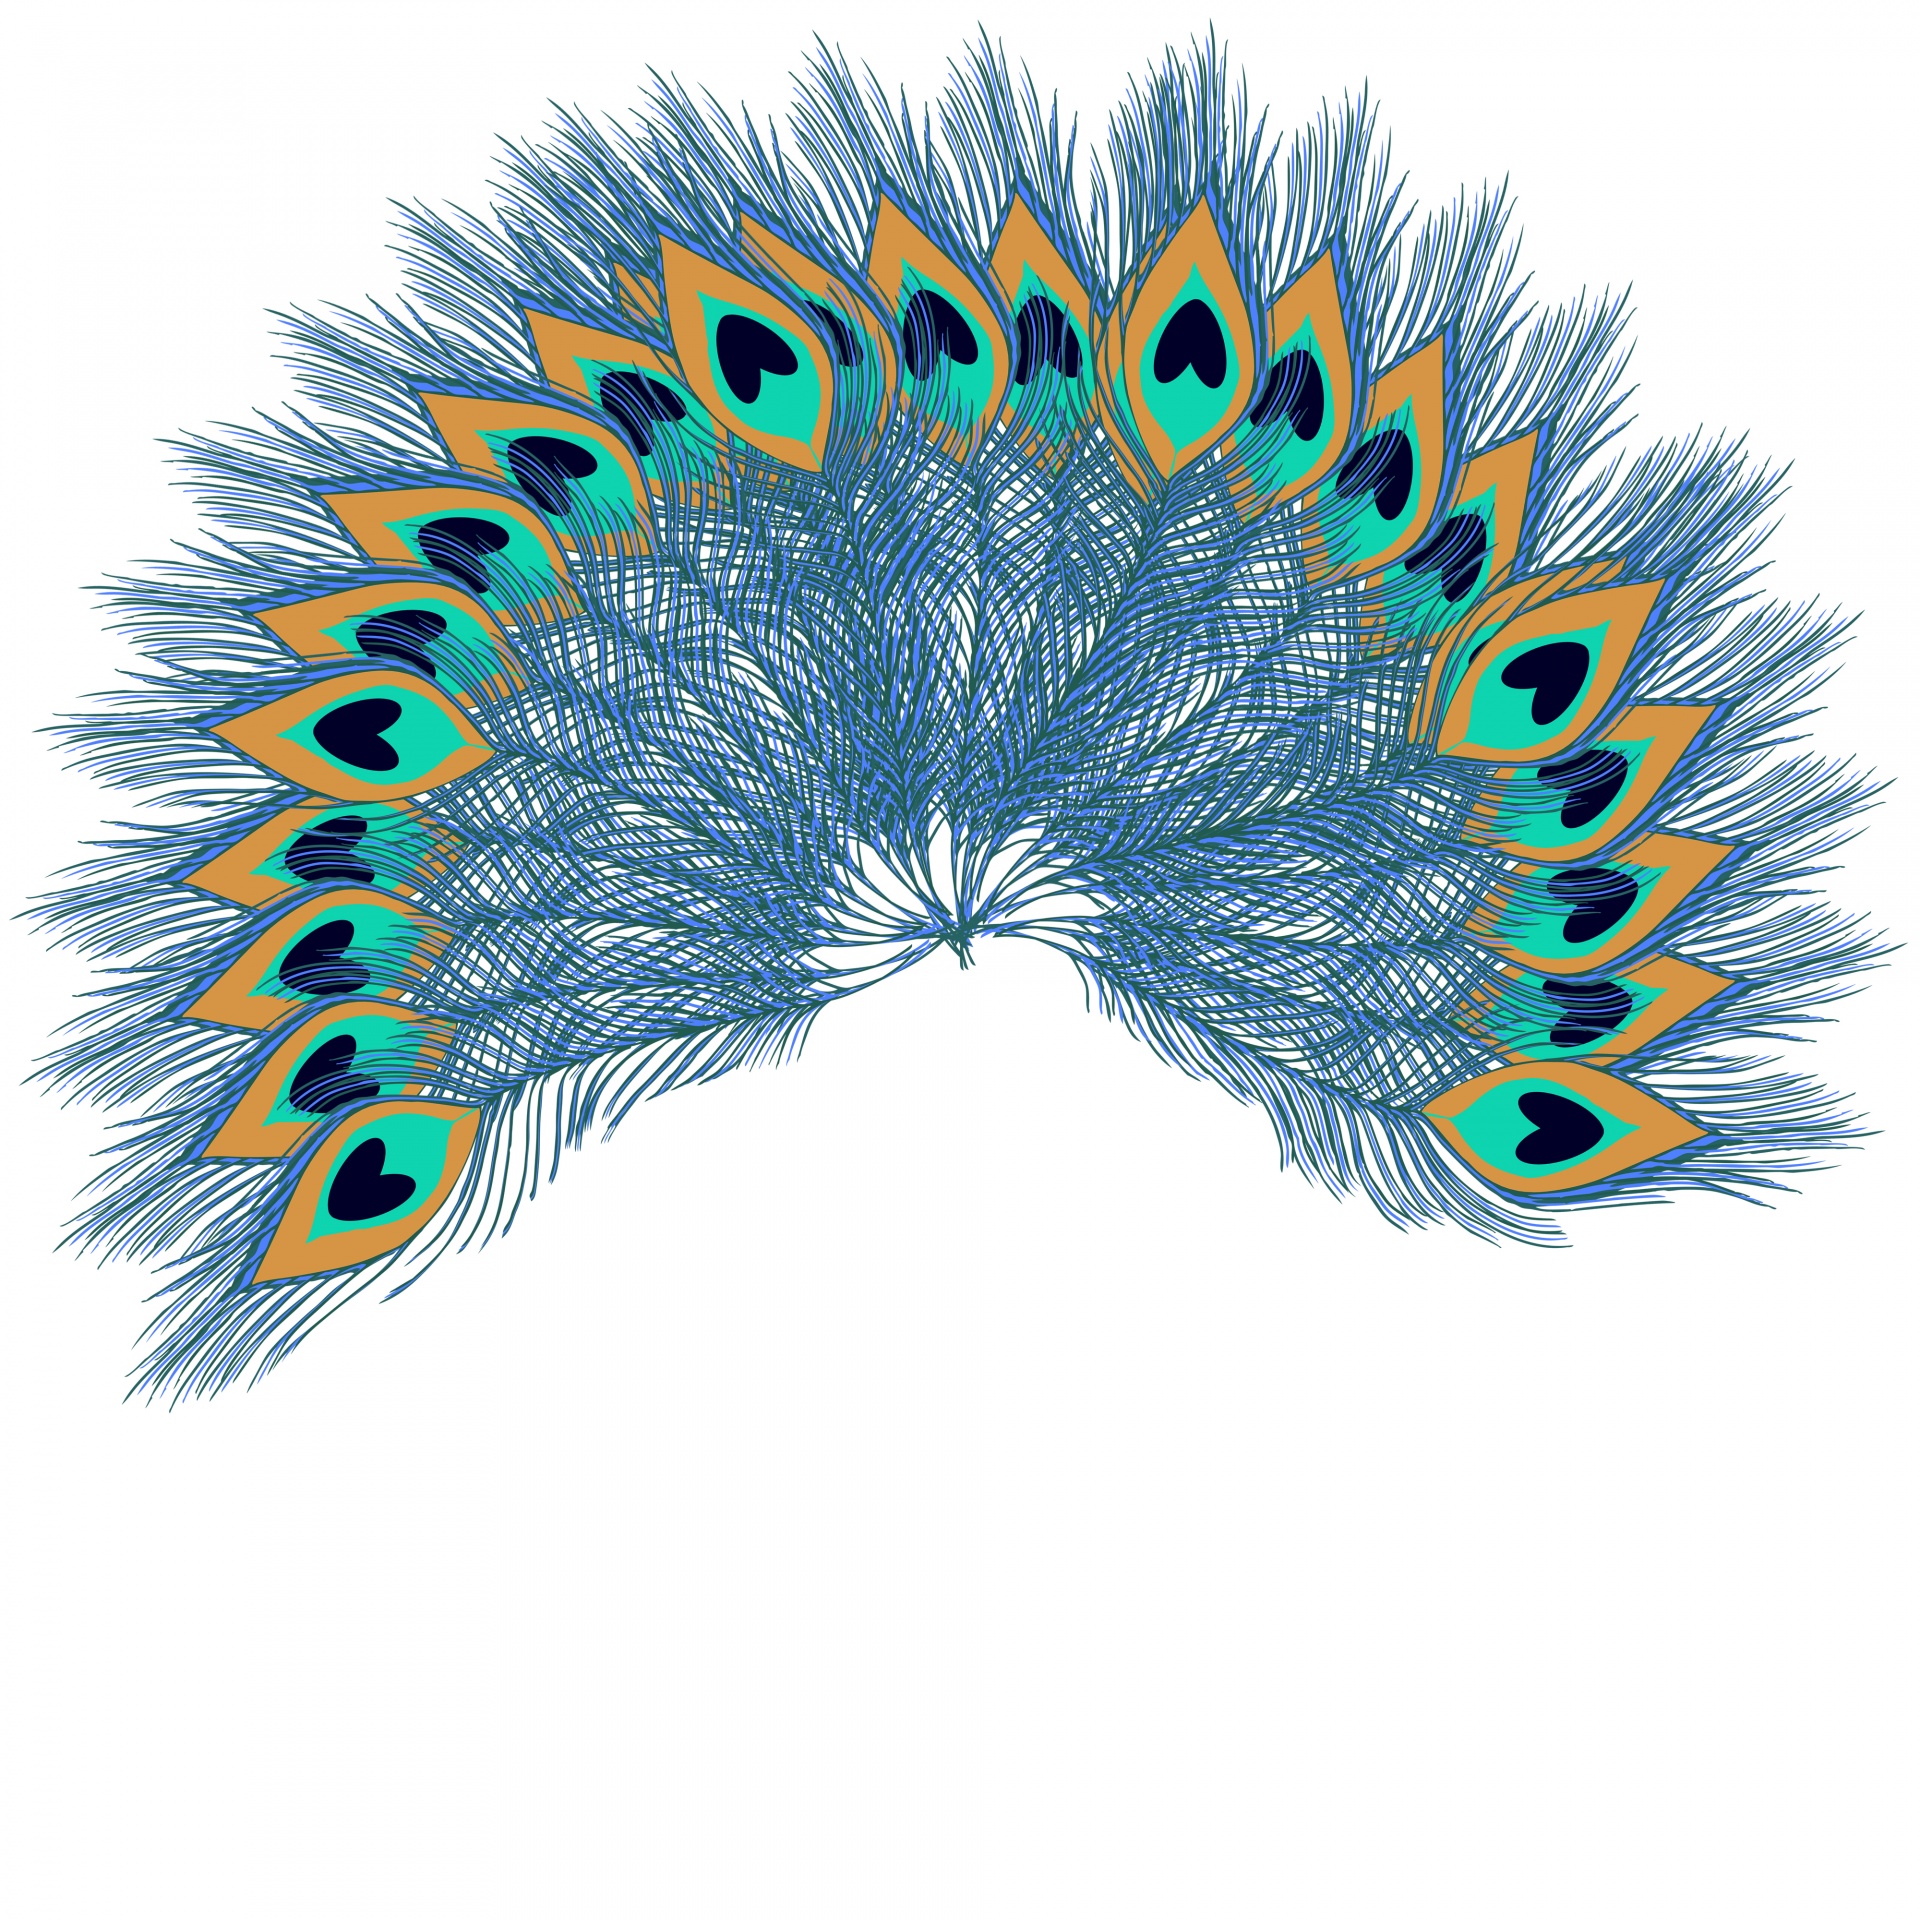 Peacock feathers fan tail